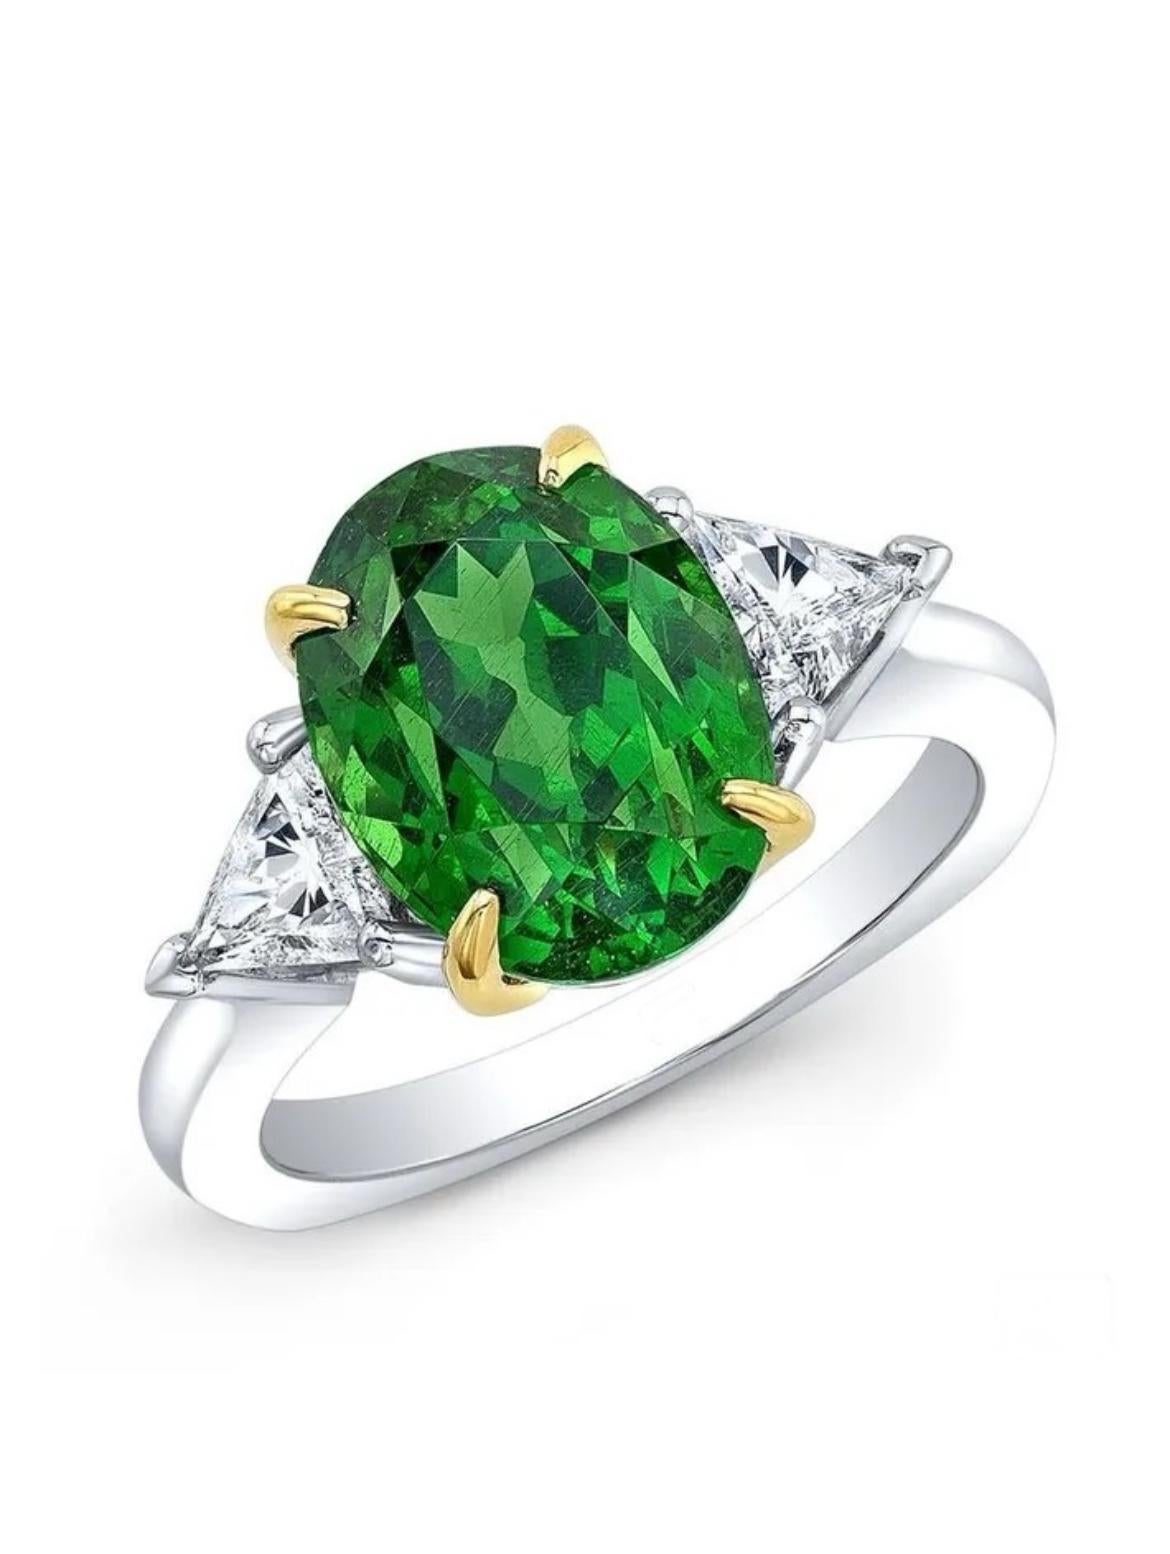 Oval Cut 6.26-carat, untreated Tsavorite Garnet Ring. GIA certified. For Sale